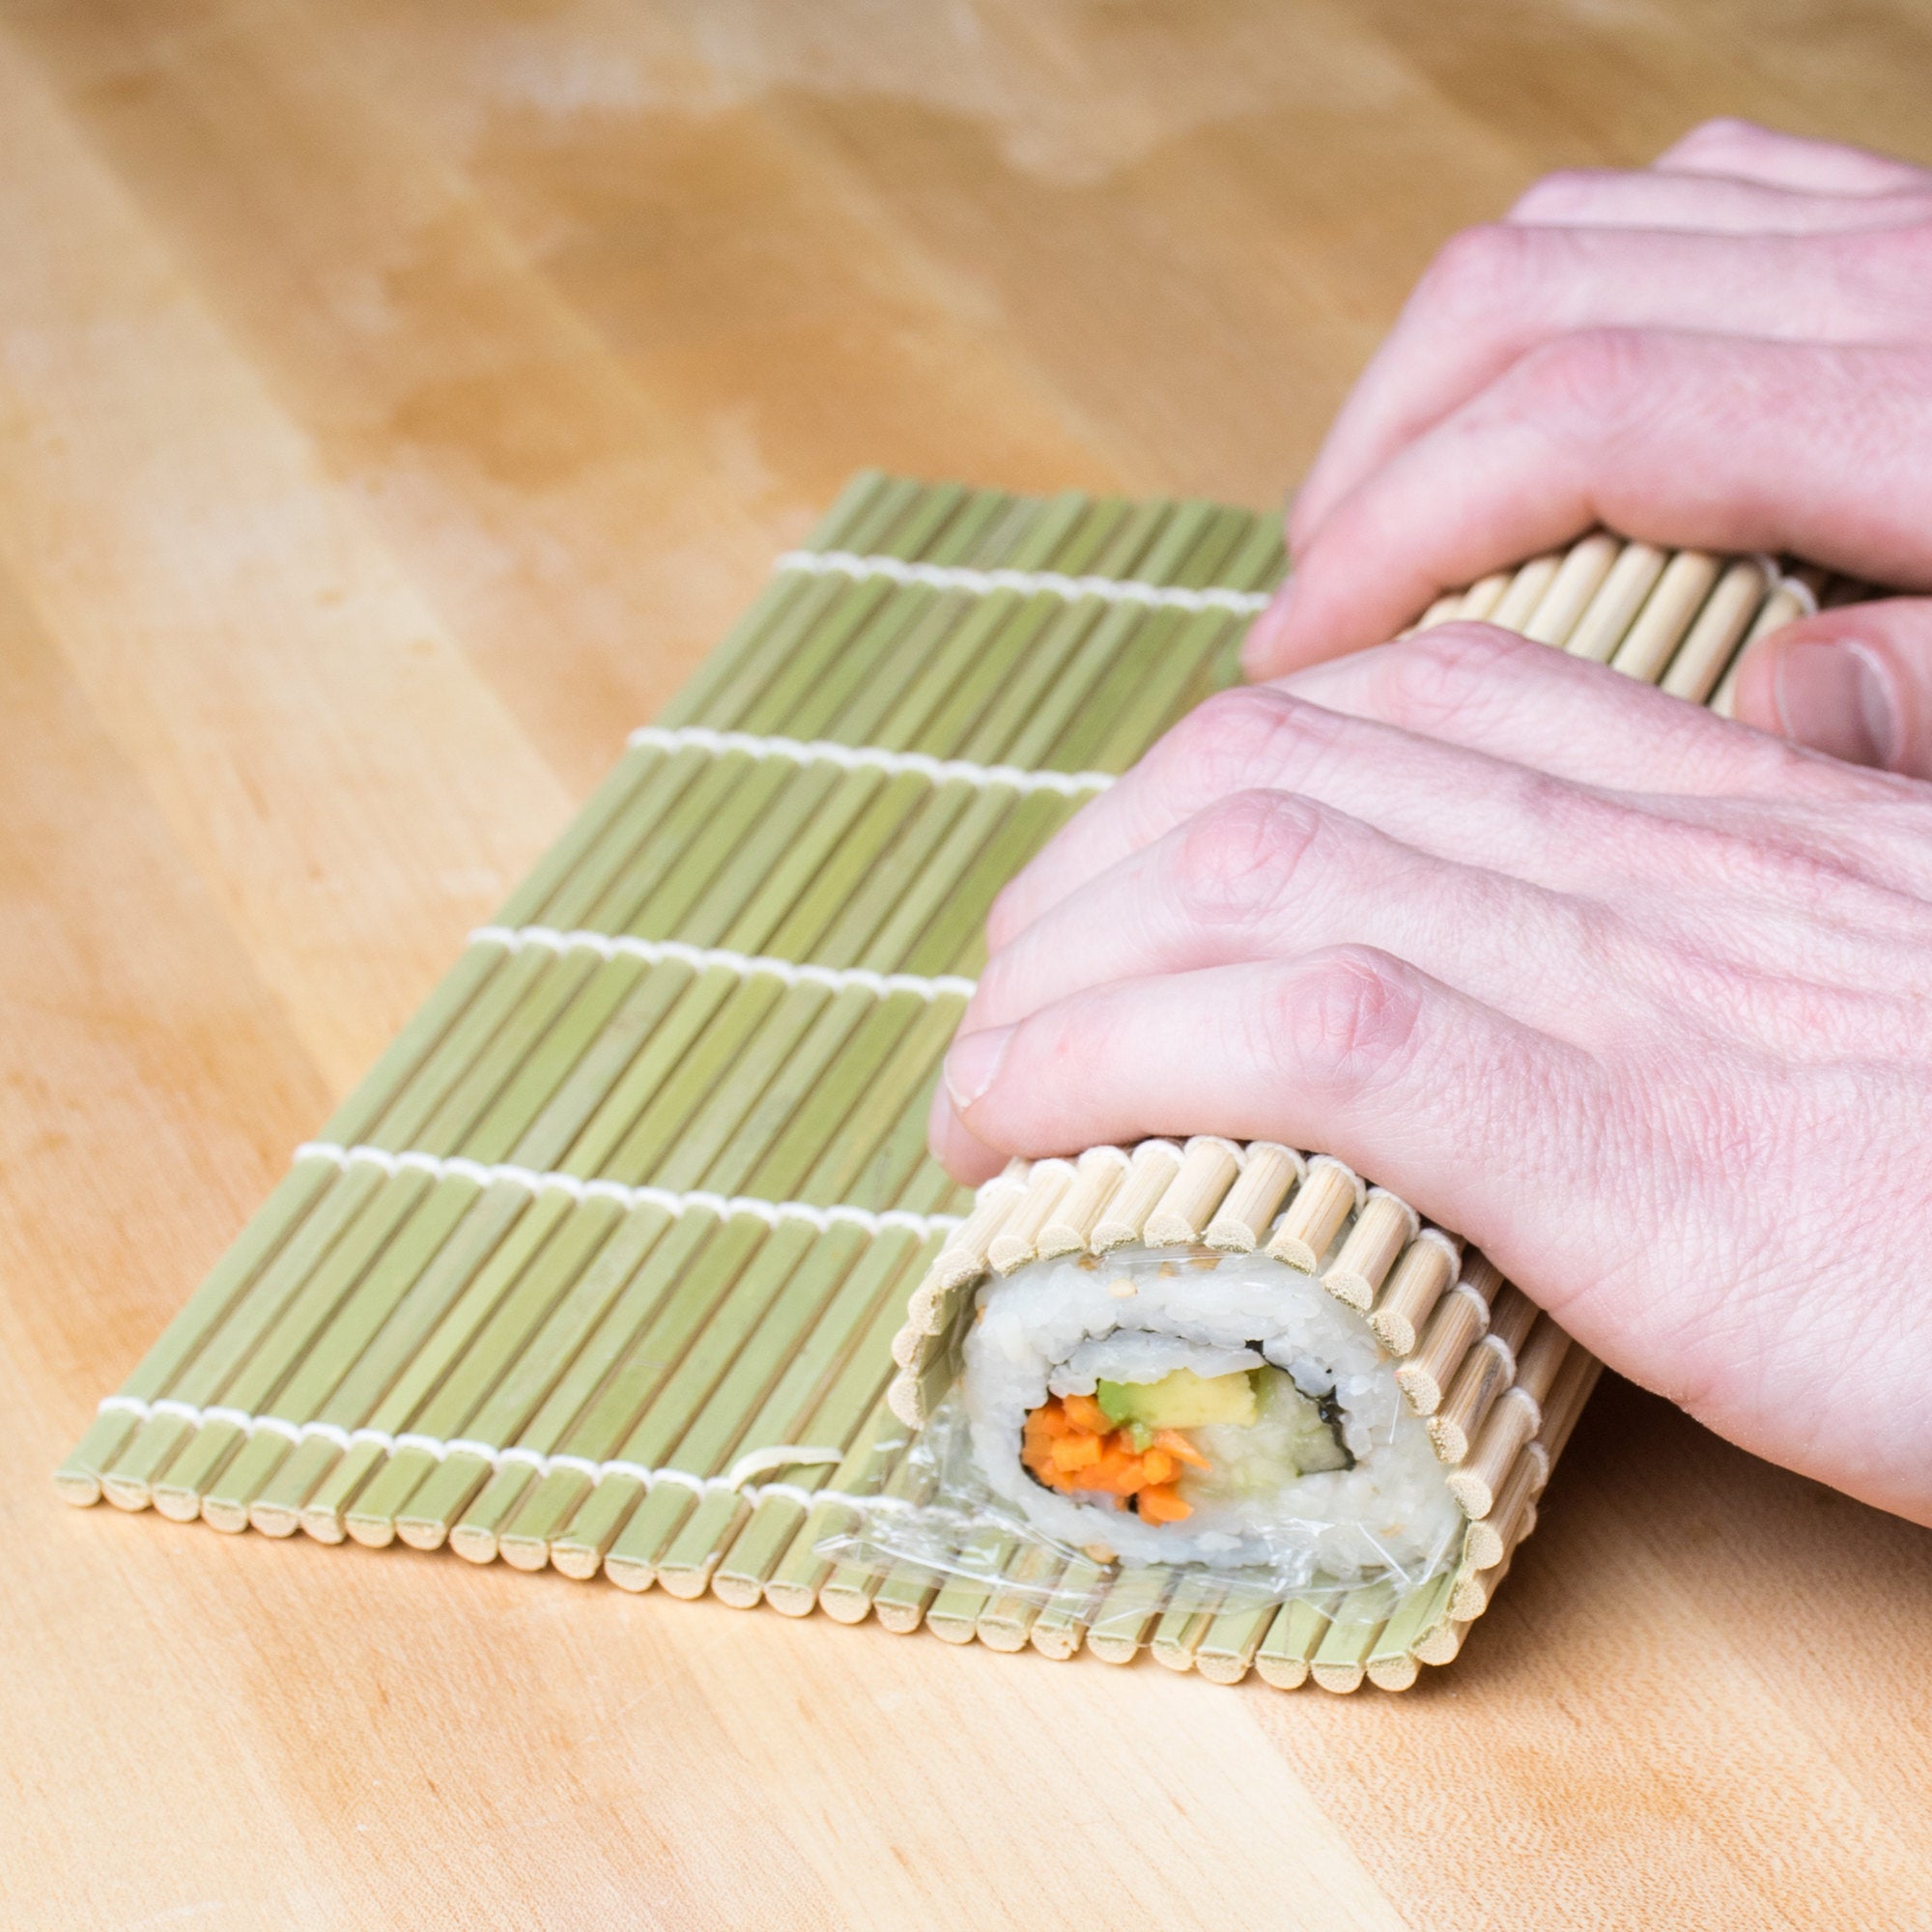 Sushi Rolling Mat - Bamboo Makisu